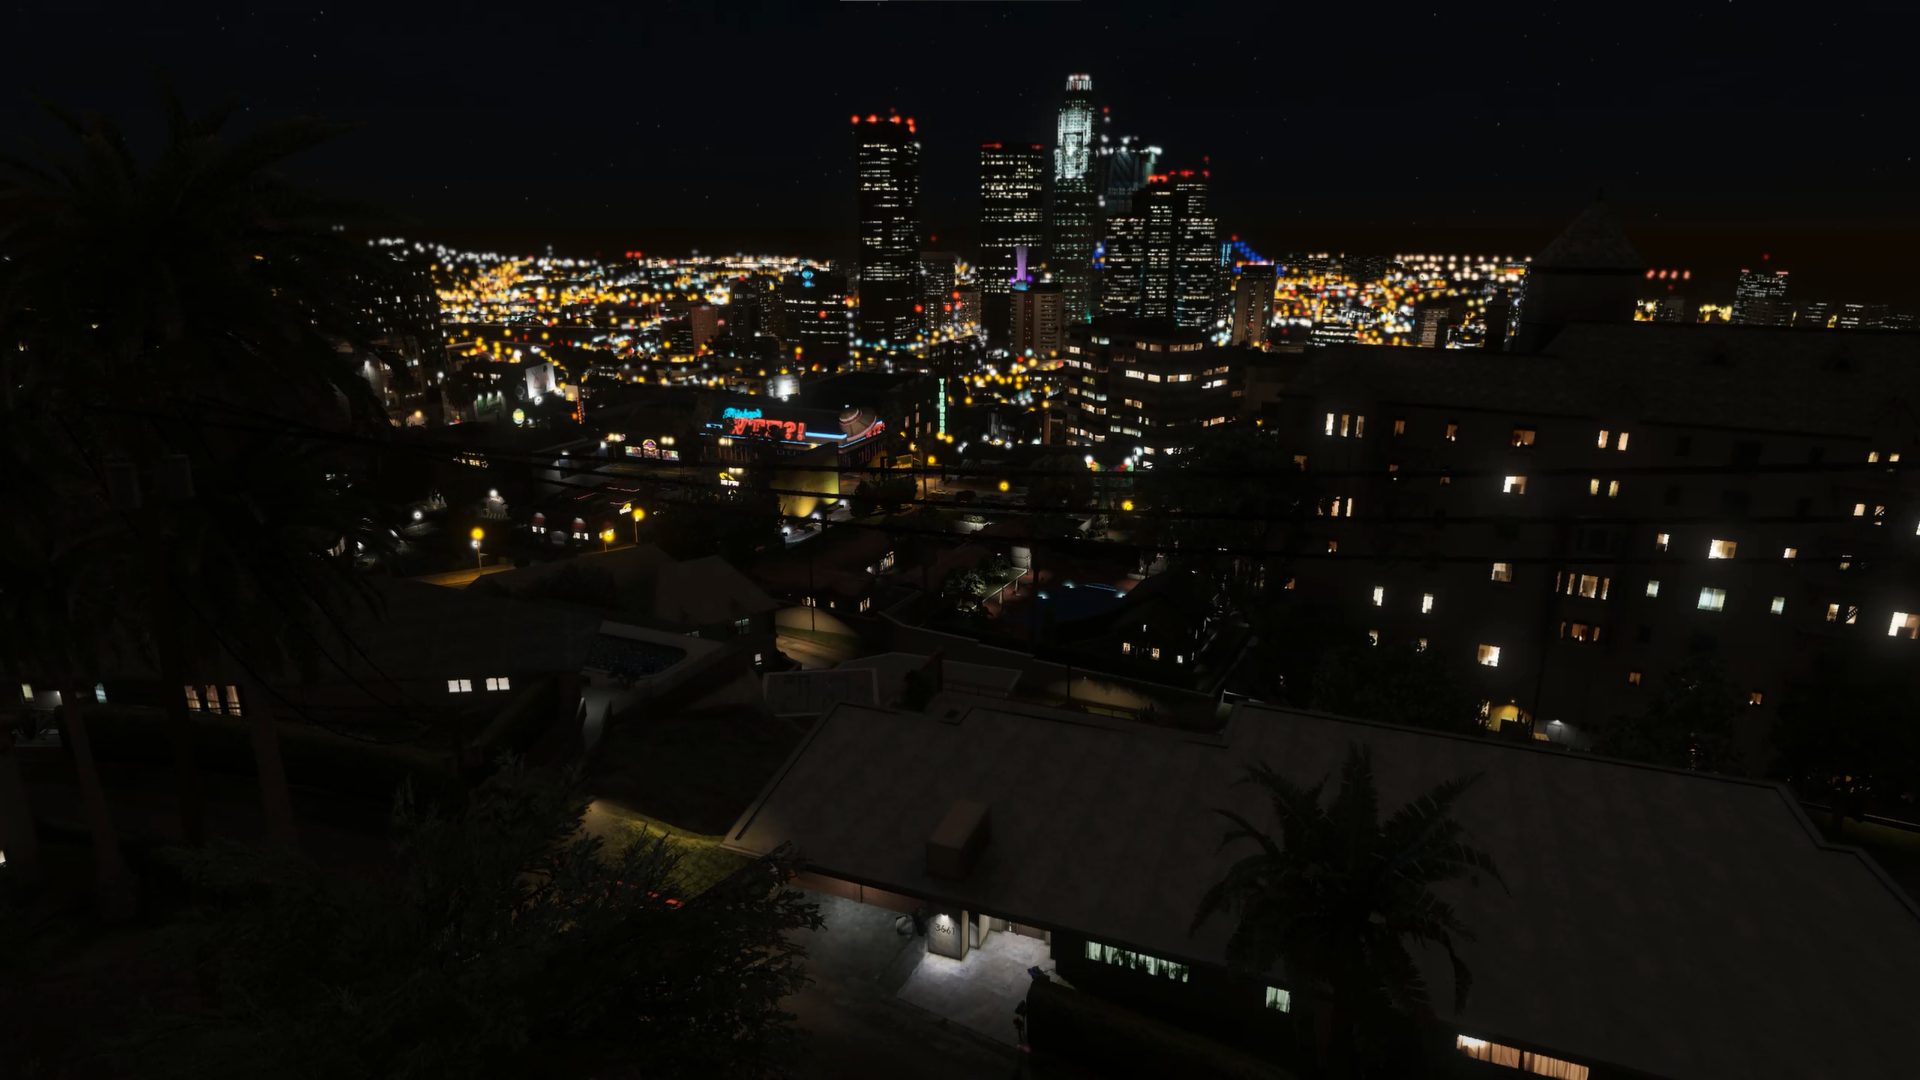 General 1920x1080 Grand Theft Auto V night city lights apartments digital art video games low light Grand Theft Auto city video game art building dark background CGI